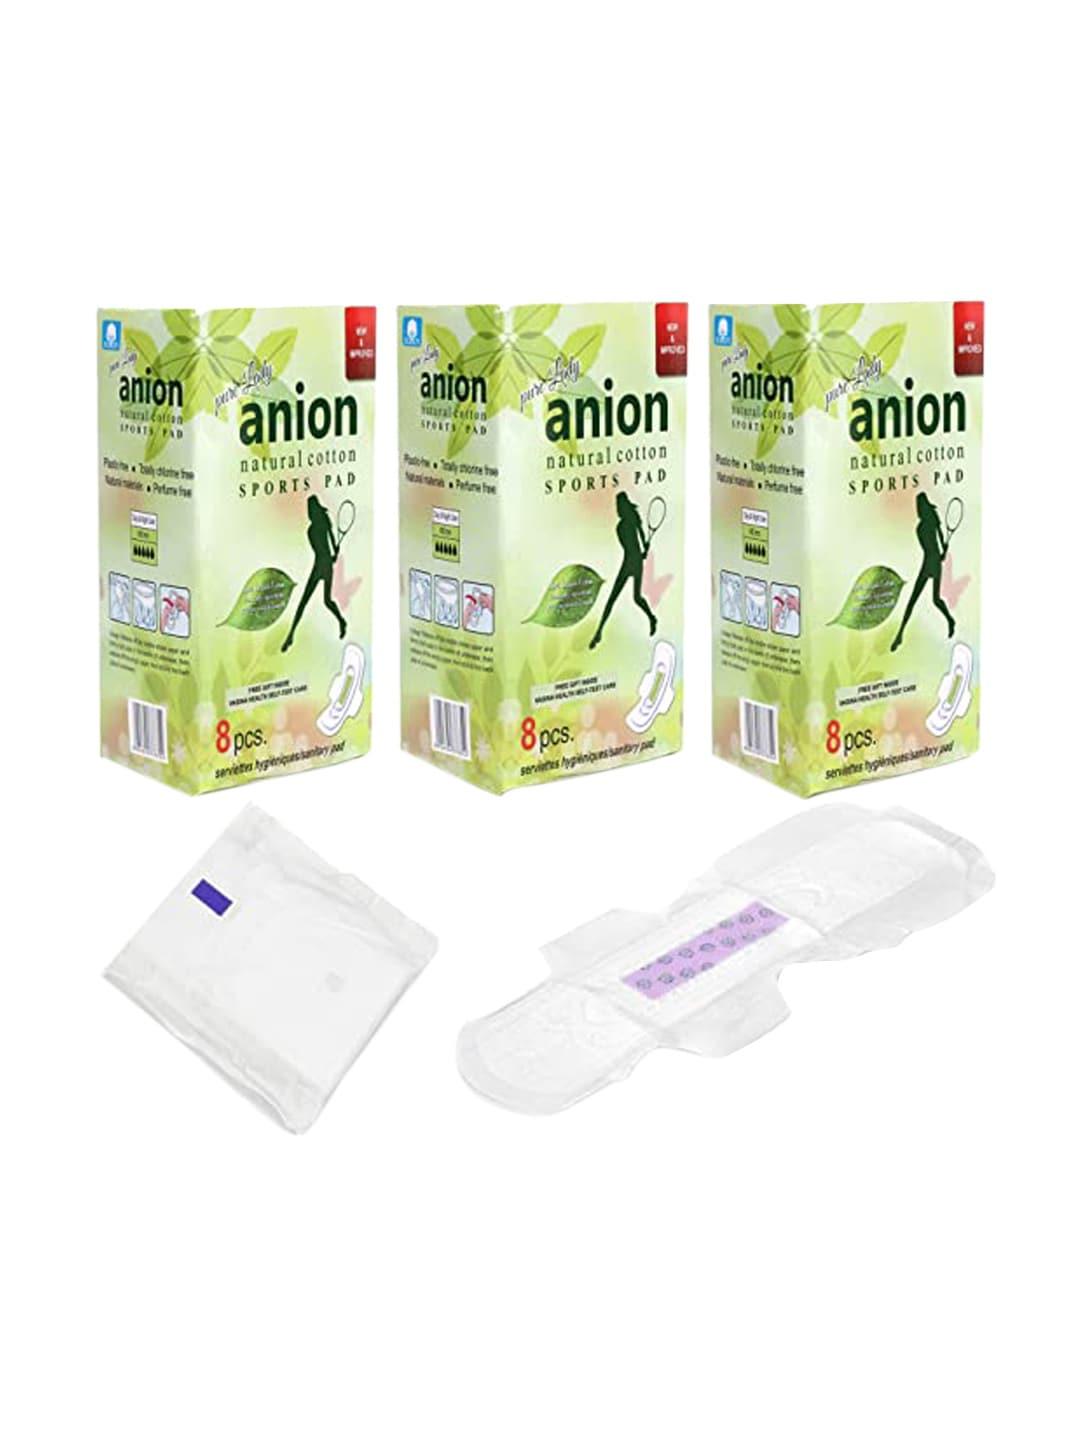 CareDone Set of 3 Anion Natural Cotton Ultra Thin Sports Sanitary Pads - 8 Pcs each